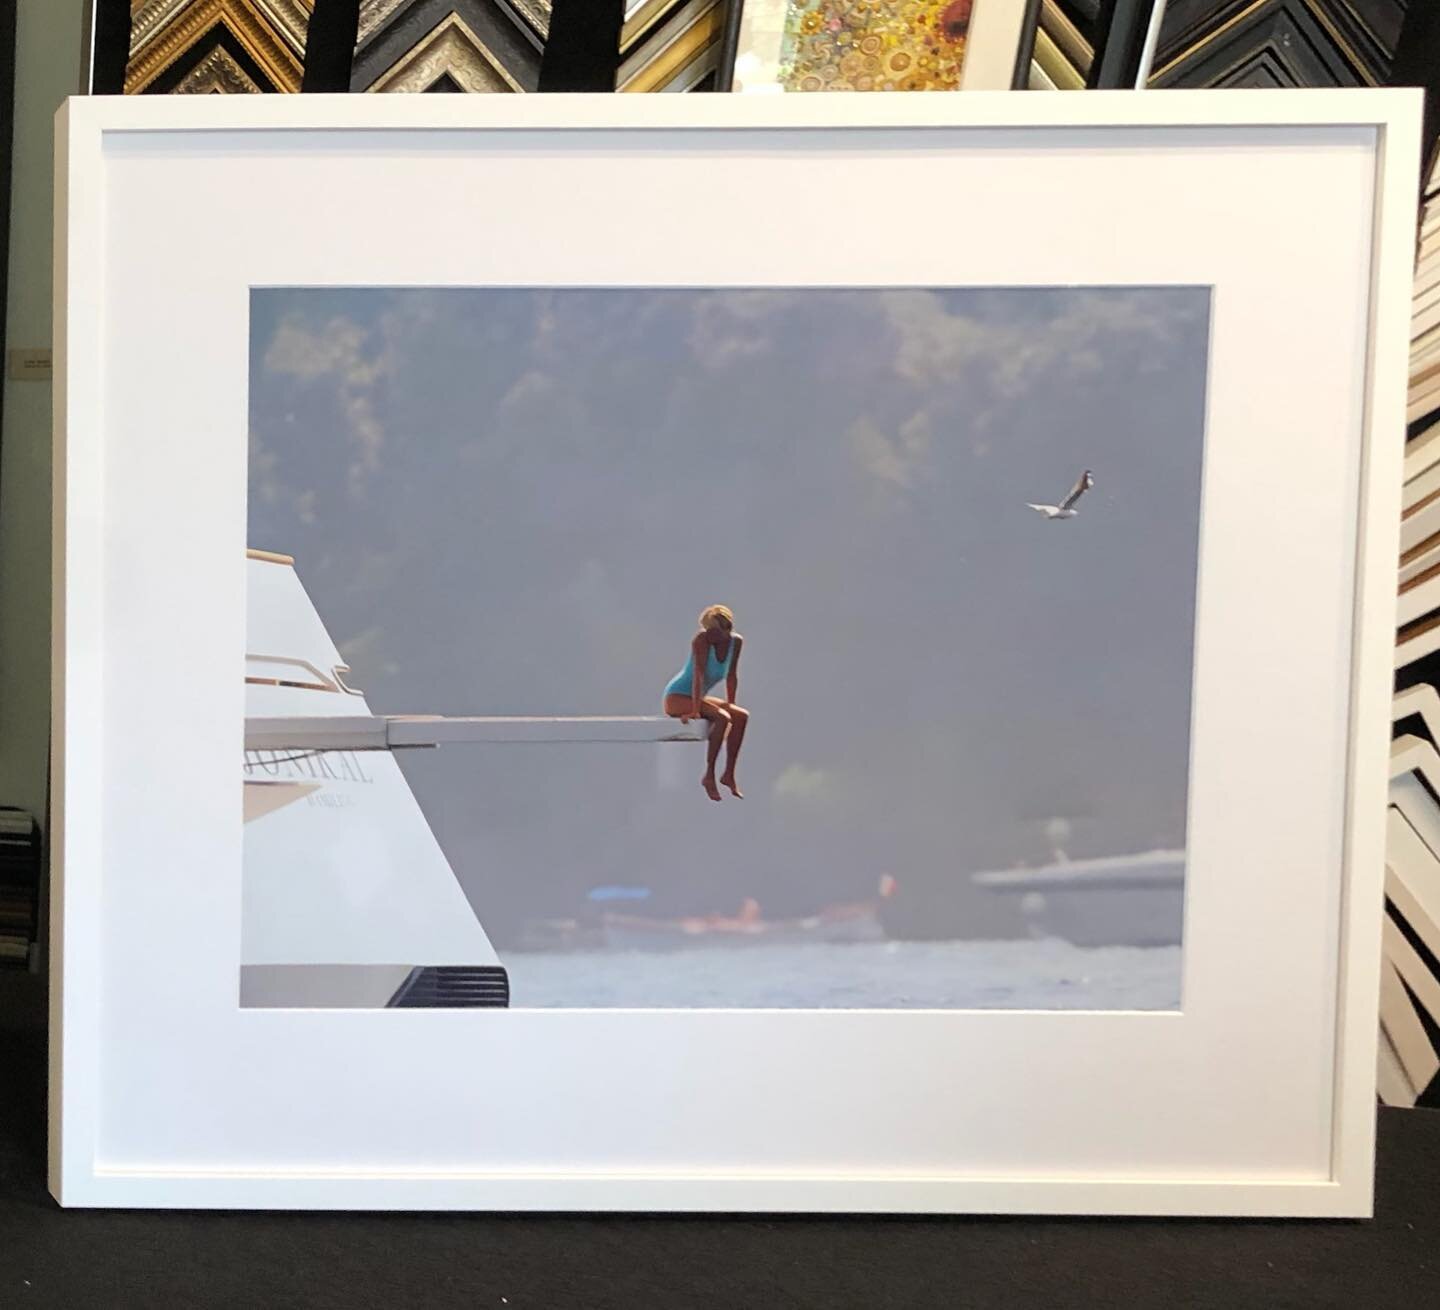 Iconic. 

Recently framed at Albury Picture Framers ✨ 

#alburypictureframers #alburyframing #alburywodonga #alburyframer #princessdiana